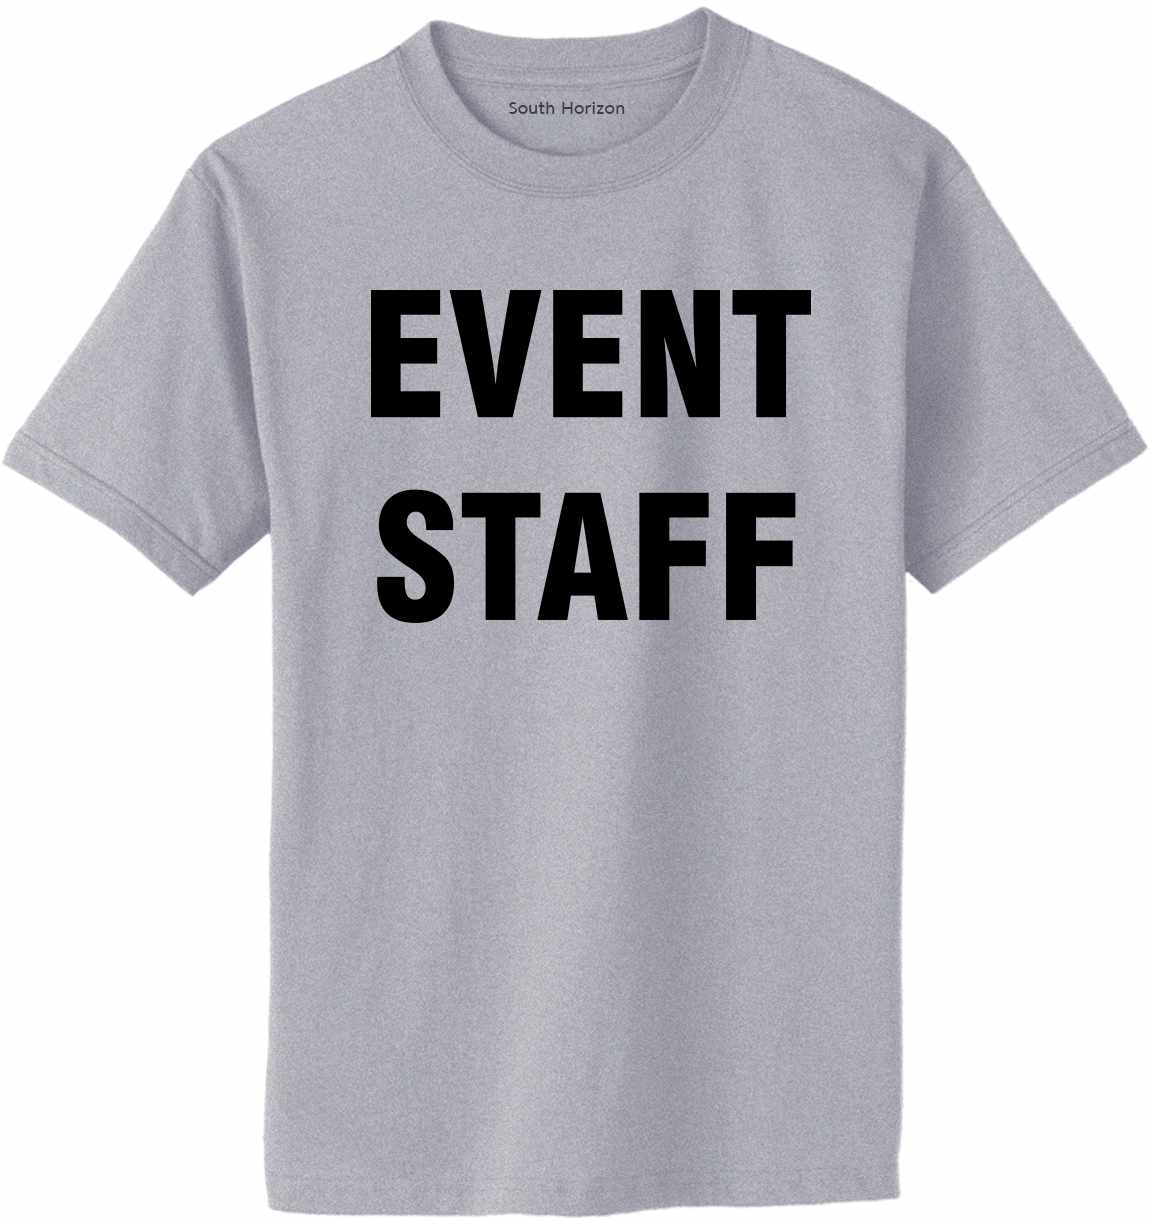 EVENT STAFF Adult T-Shirt (#399-1)